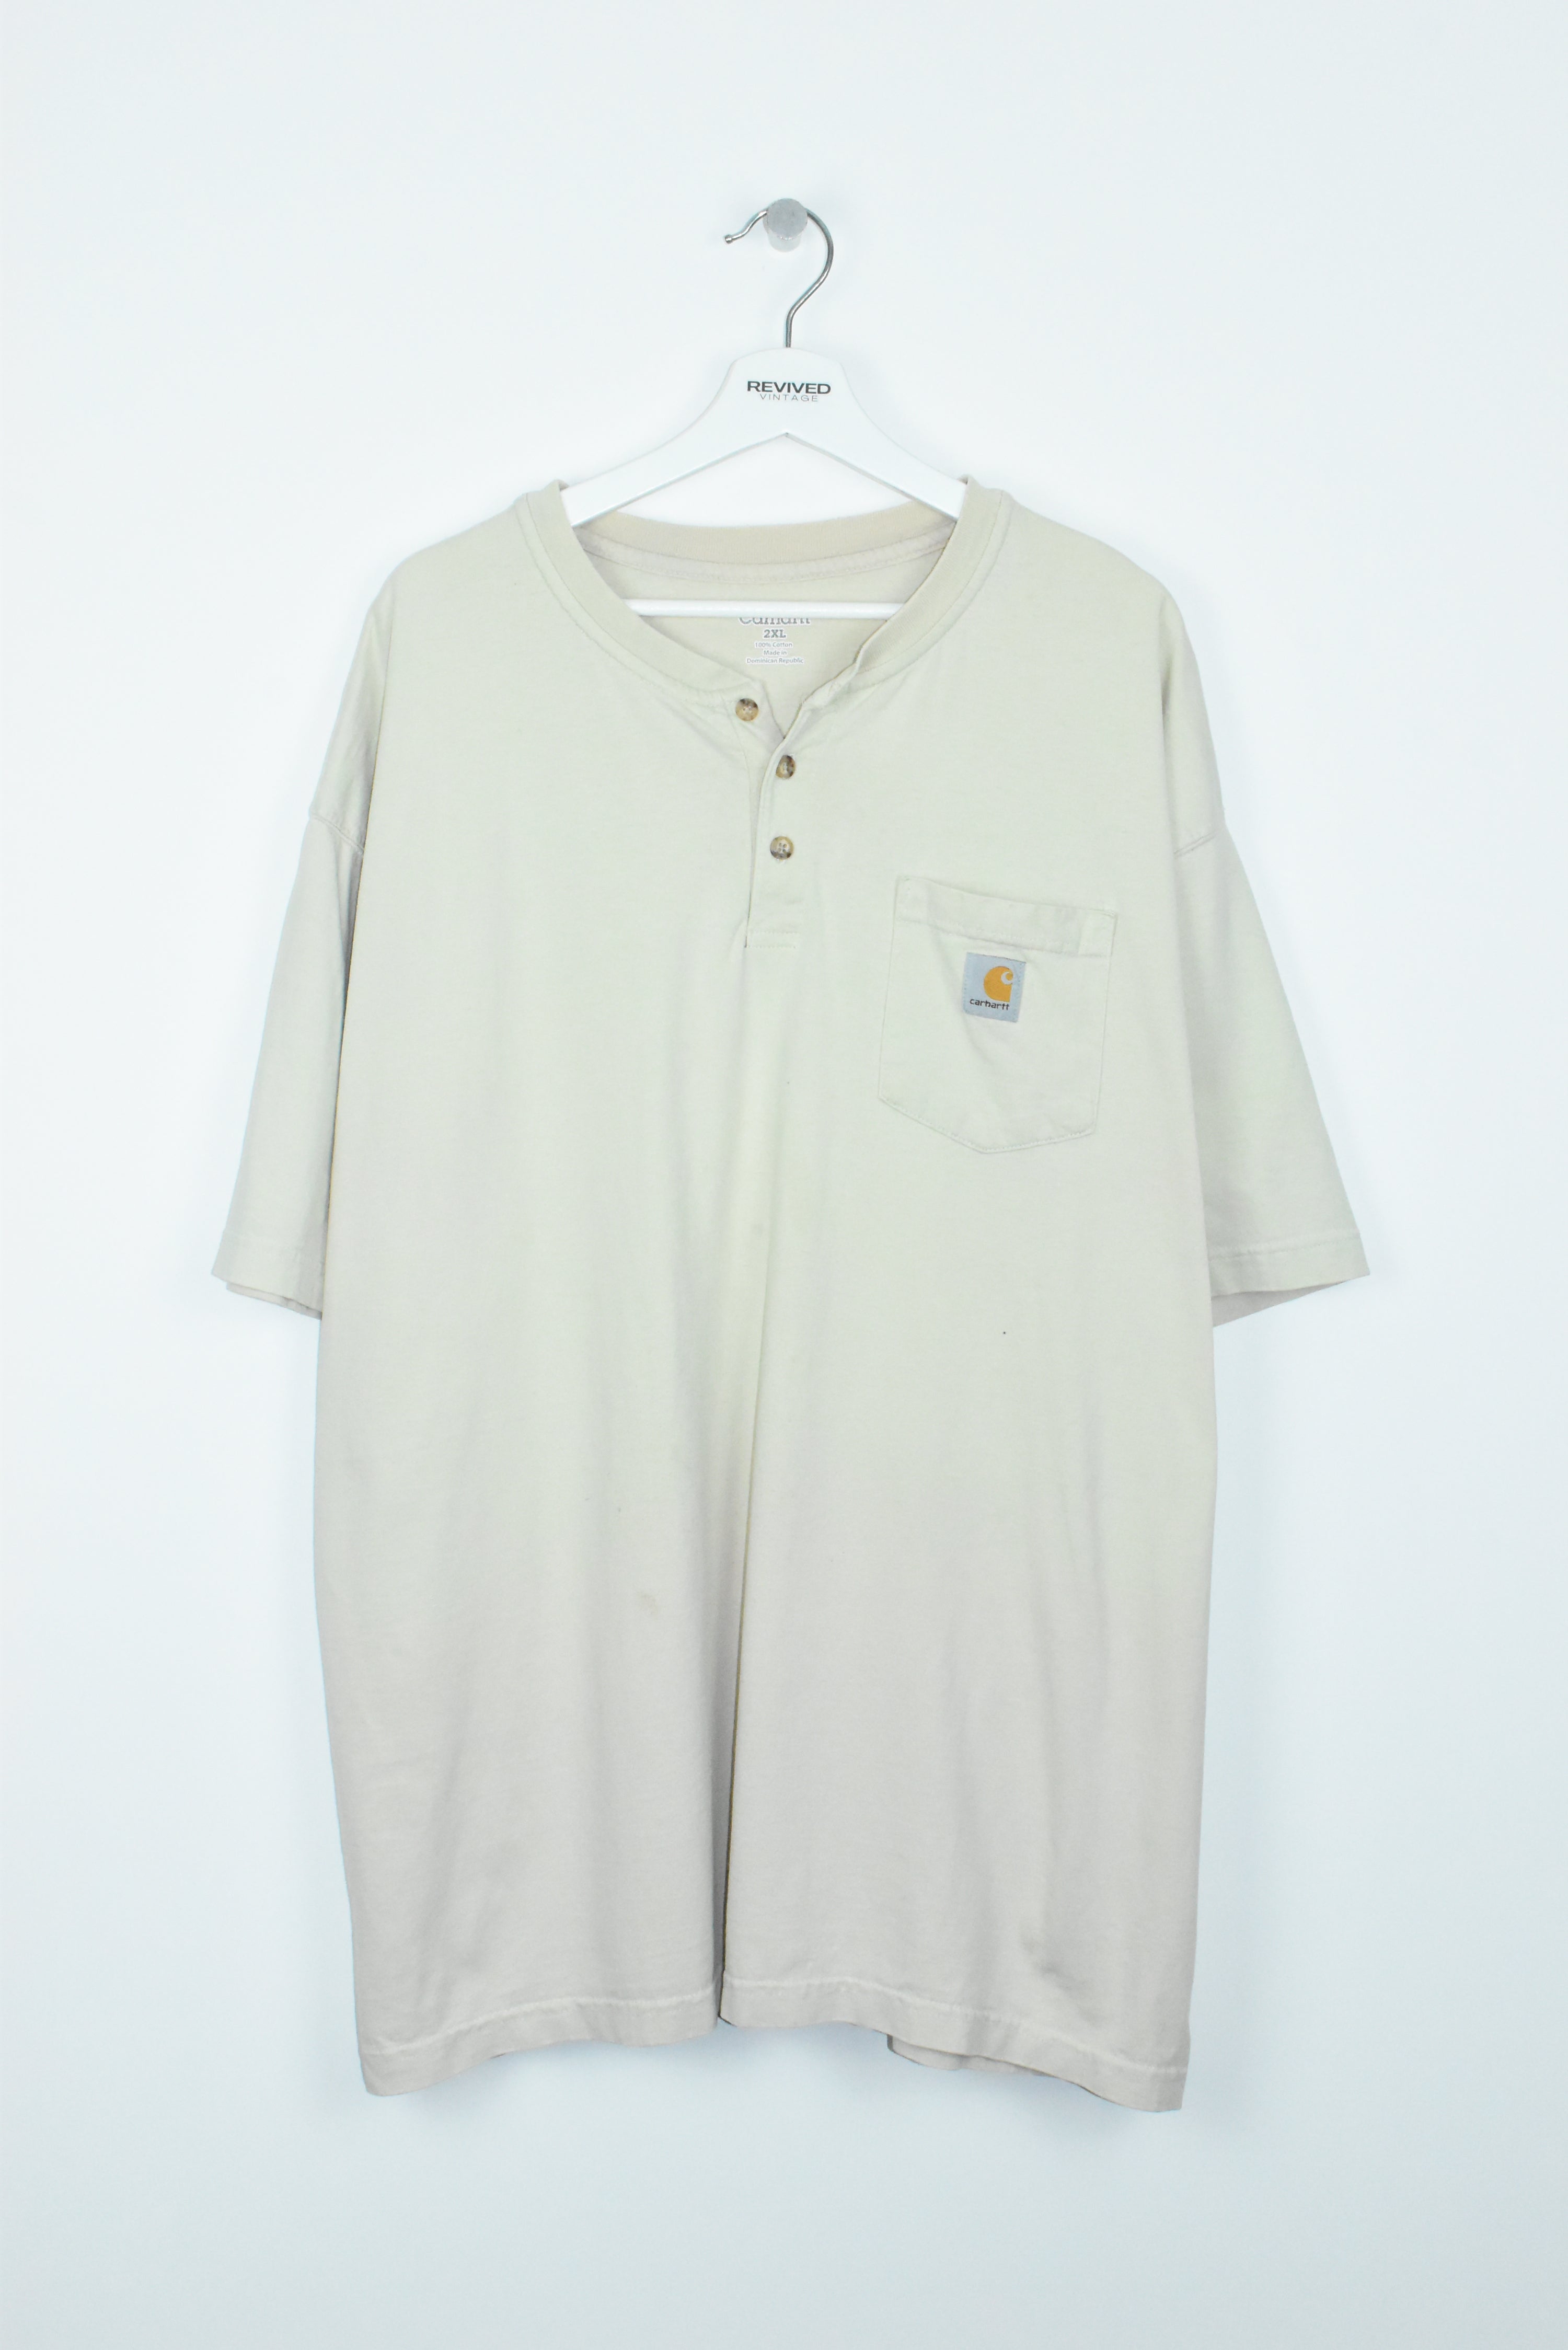 Vintage Carhartt Pocket T Shirt XXL